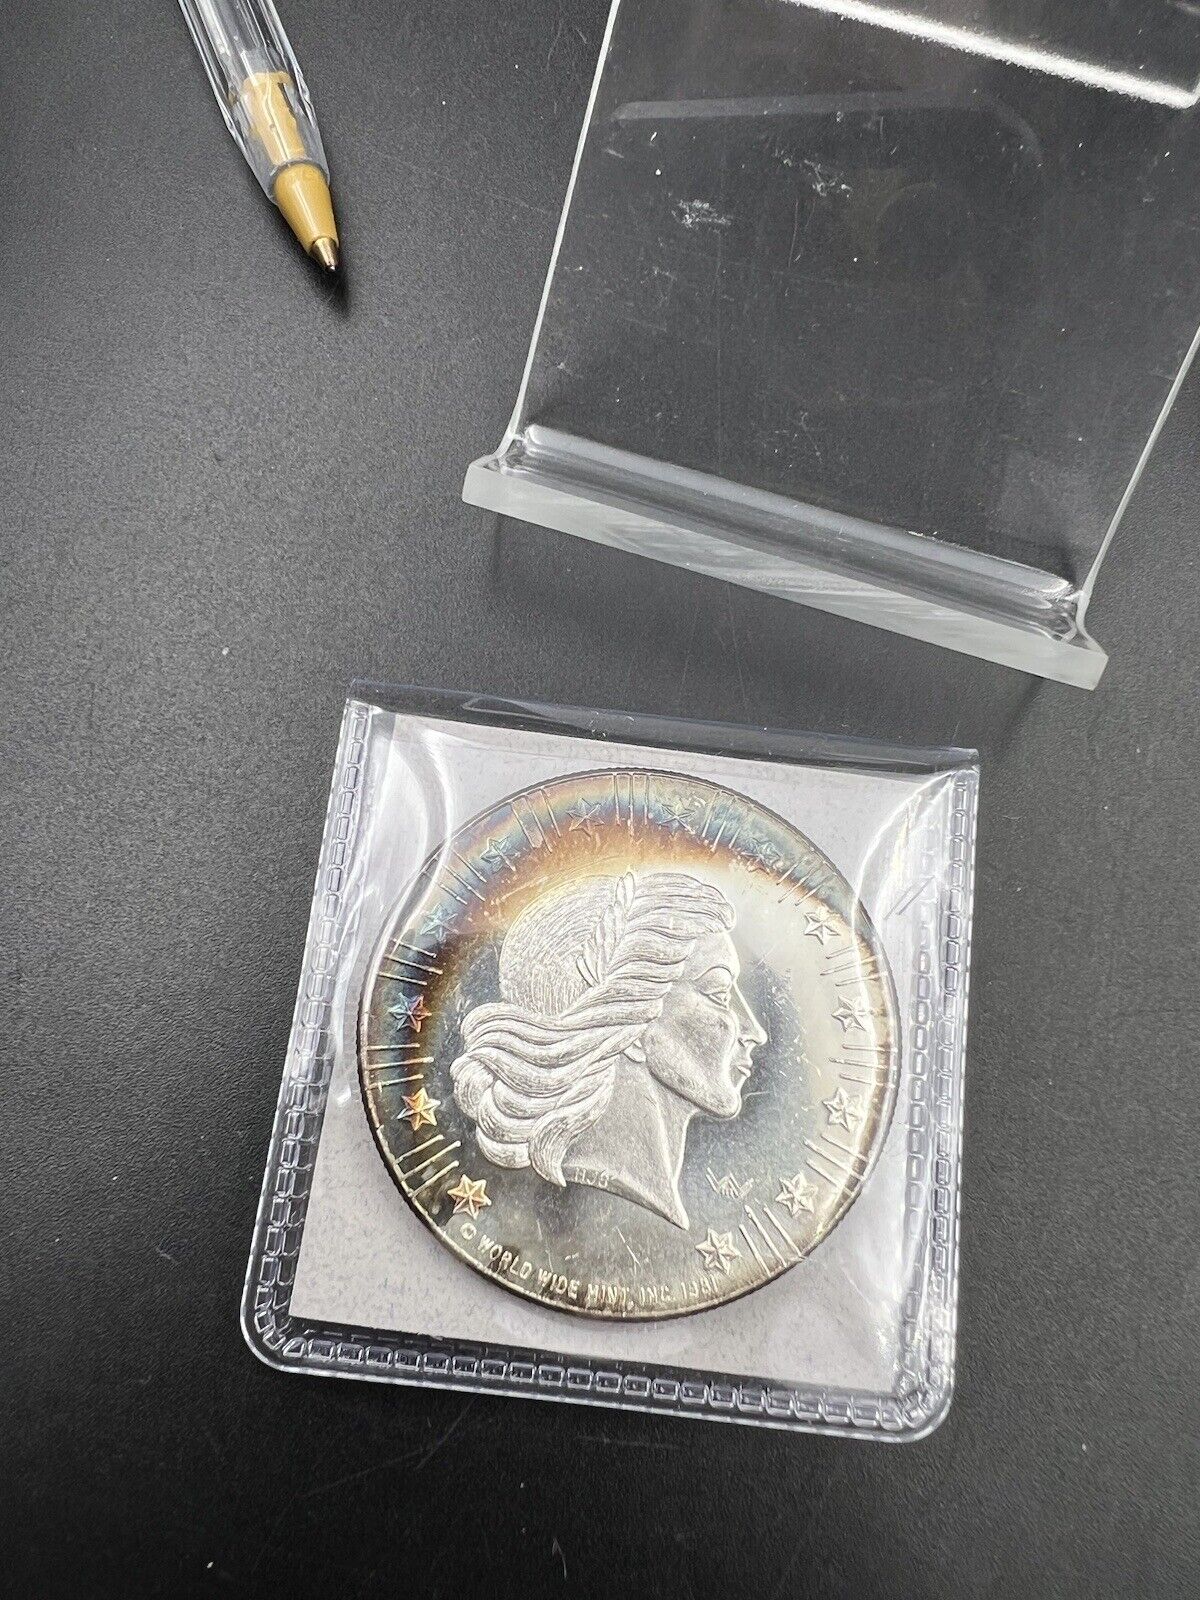 World Wide Mint 1 oz Silver Classic Liberty Head / Eagle round coin GEM BU TONER